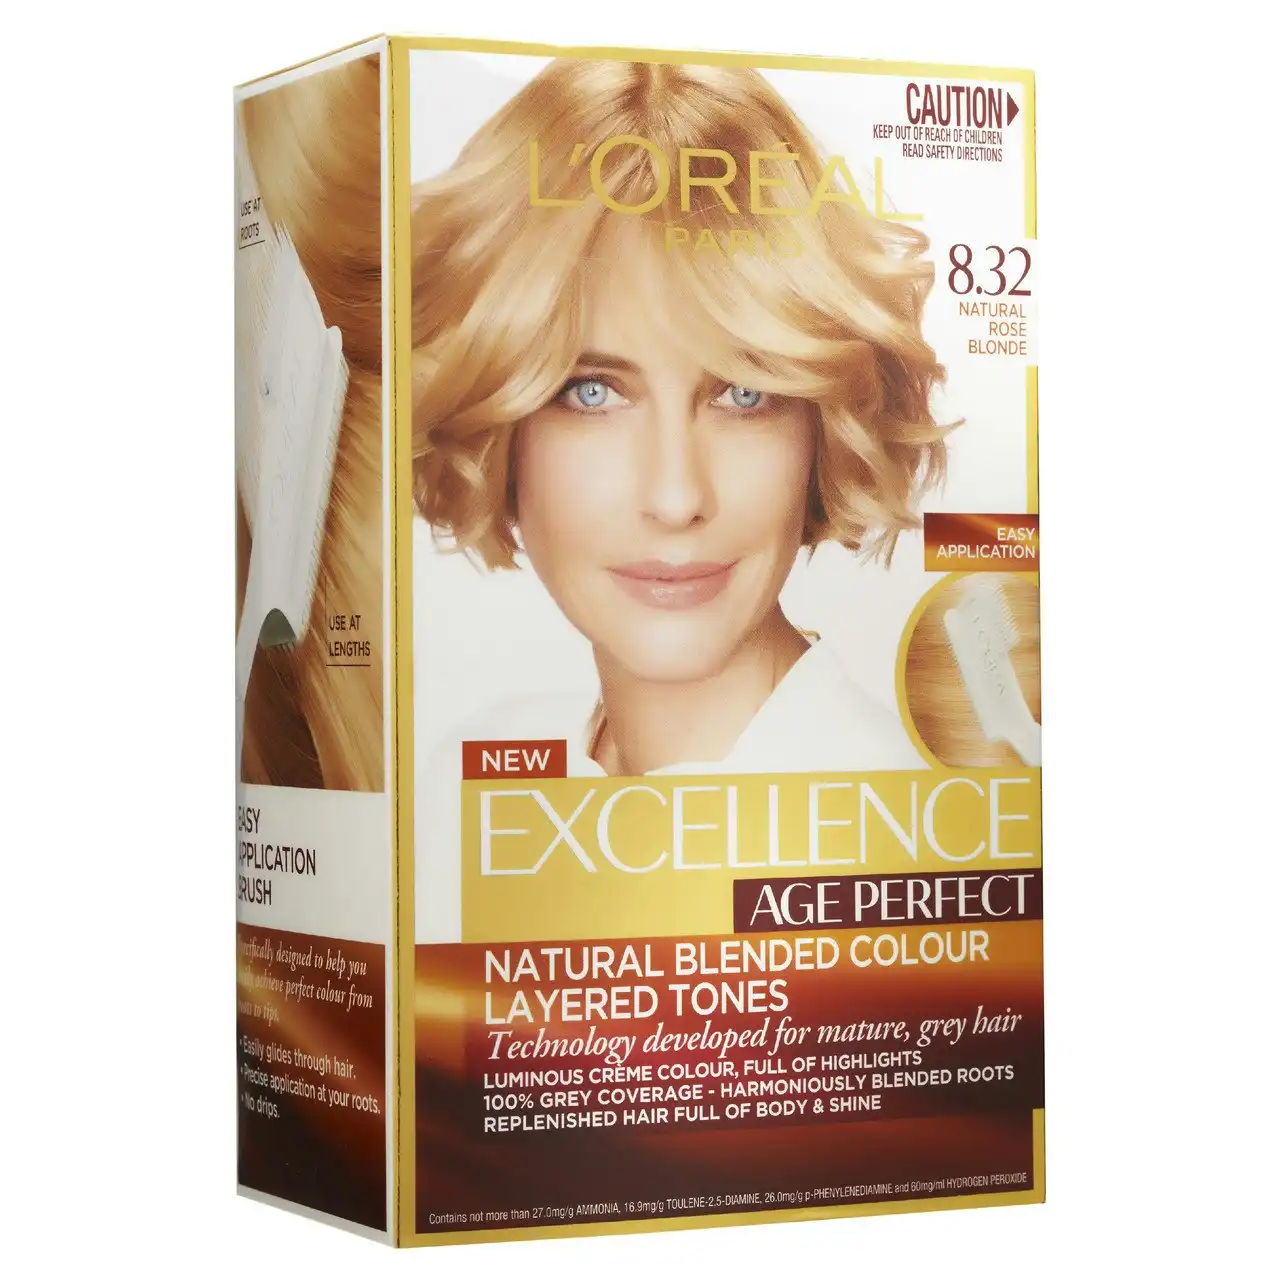 L'Oreal Paris Excellence Age Perfect Permanent Hair Colour - 8.32 Natural Rose Blonde (Natural Blended Colour)